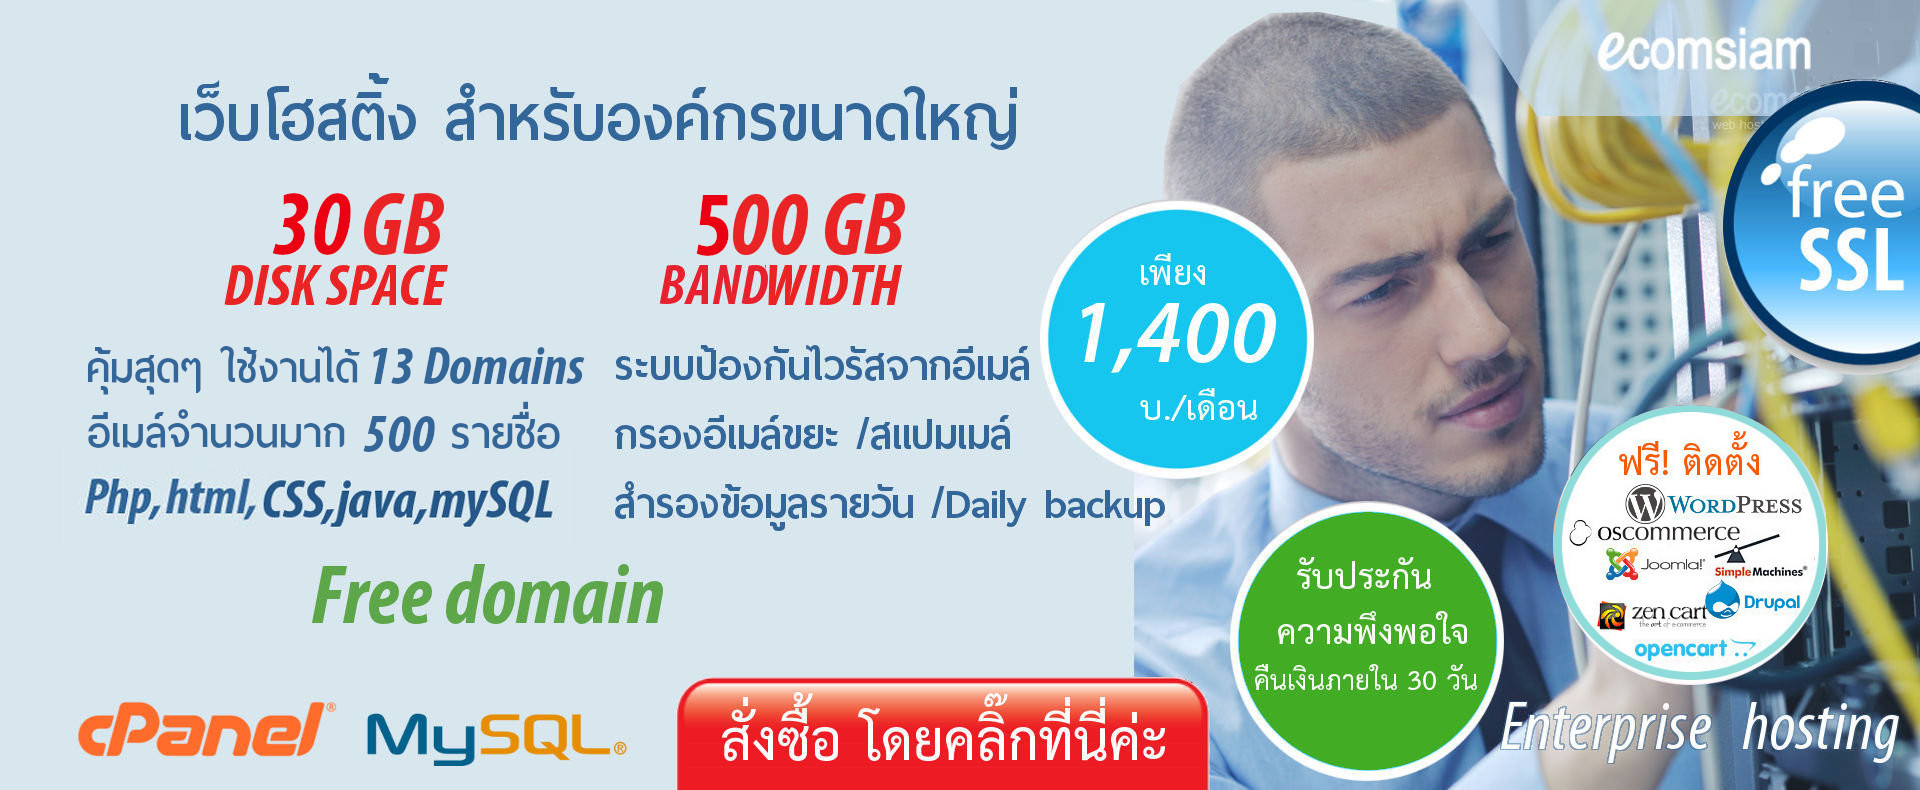 web hosting thai แนะนำ Enterprise web hosting thailand เว็บโฮสต์ติ้งสำหรับองค์กรขนาดใหญ่ Enterprise hosting : เพื่อการใช้งานเว็บไซต์และอีเมล์จำนวนมาก ราคาเพียง 1,400 บ./เดือน เว็บโฮสติ้งไทย ฟรี โดเมน ฟรี SSL ฟรีติดตั้ง แนะนำเว็บโฮสติ้ง บริการลูกค้า  Support ดูแลดี โดย thailandwebhost.com - enterprise web hosting thailand free domain